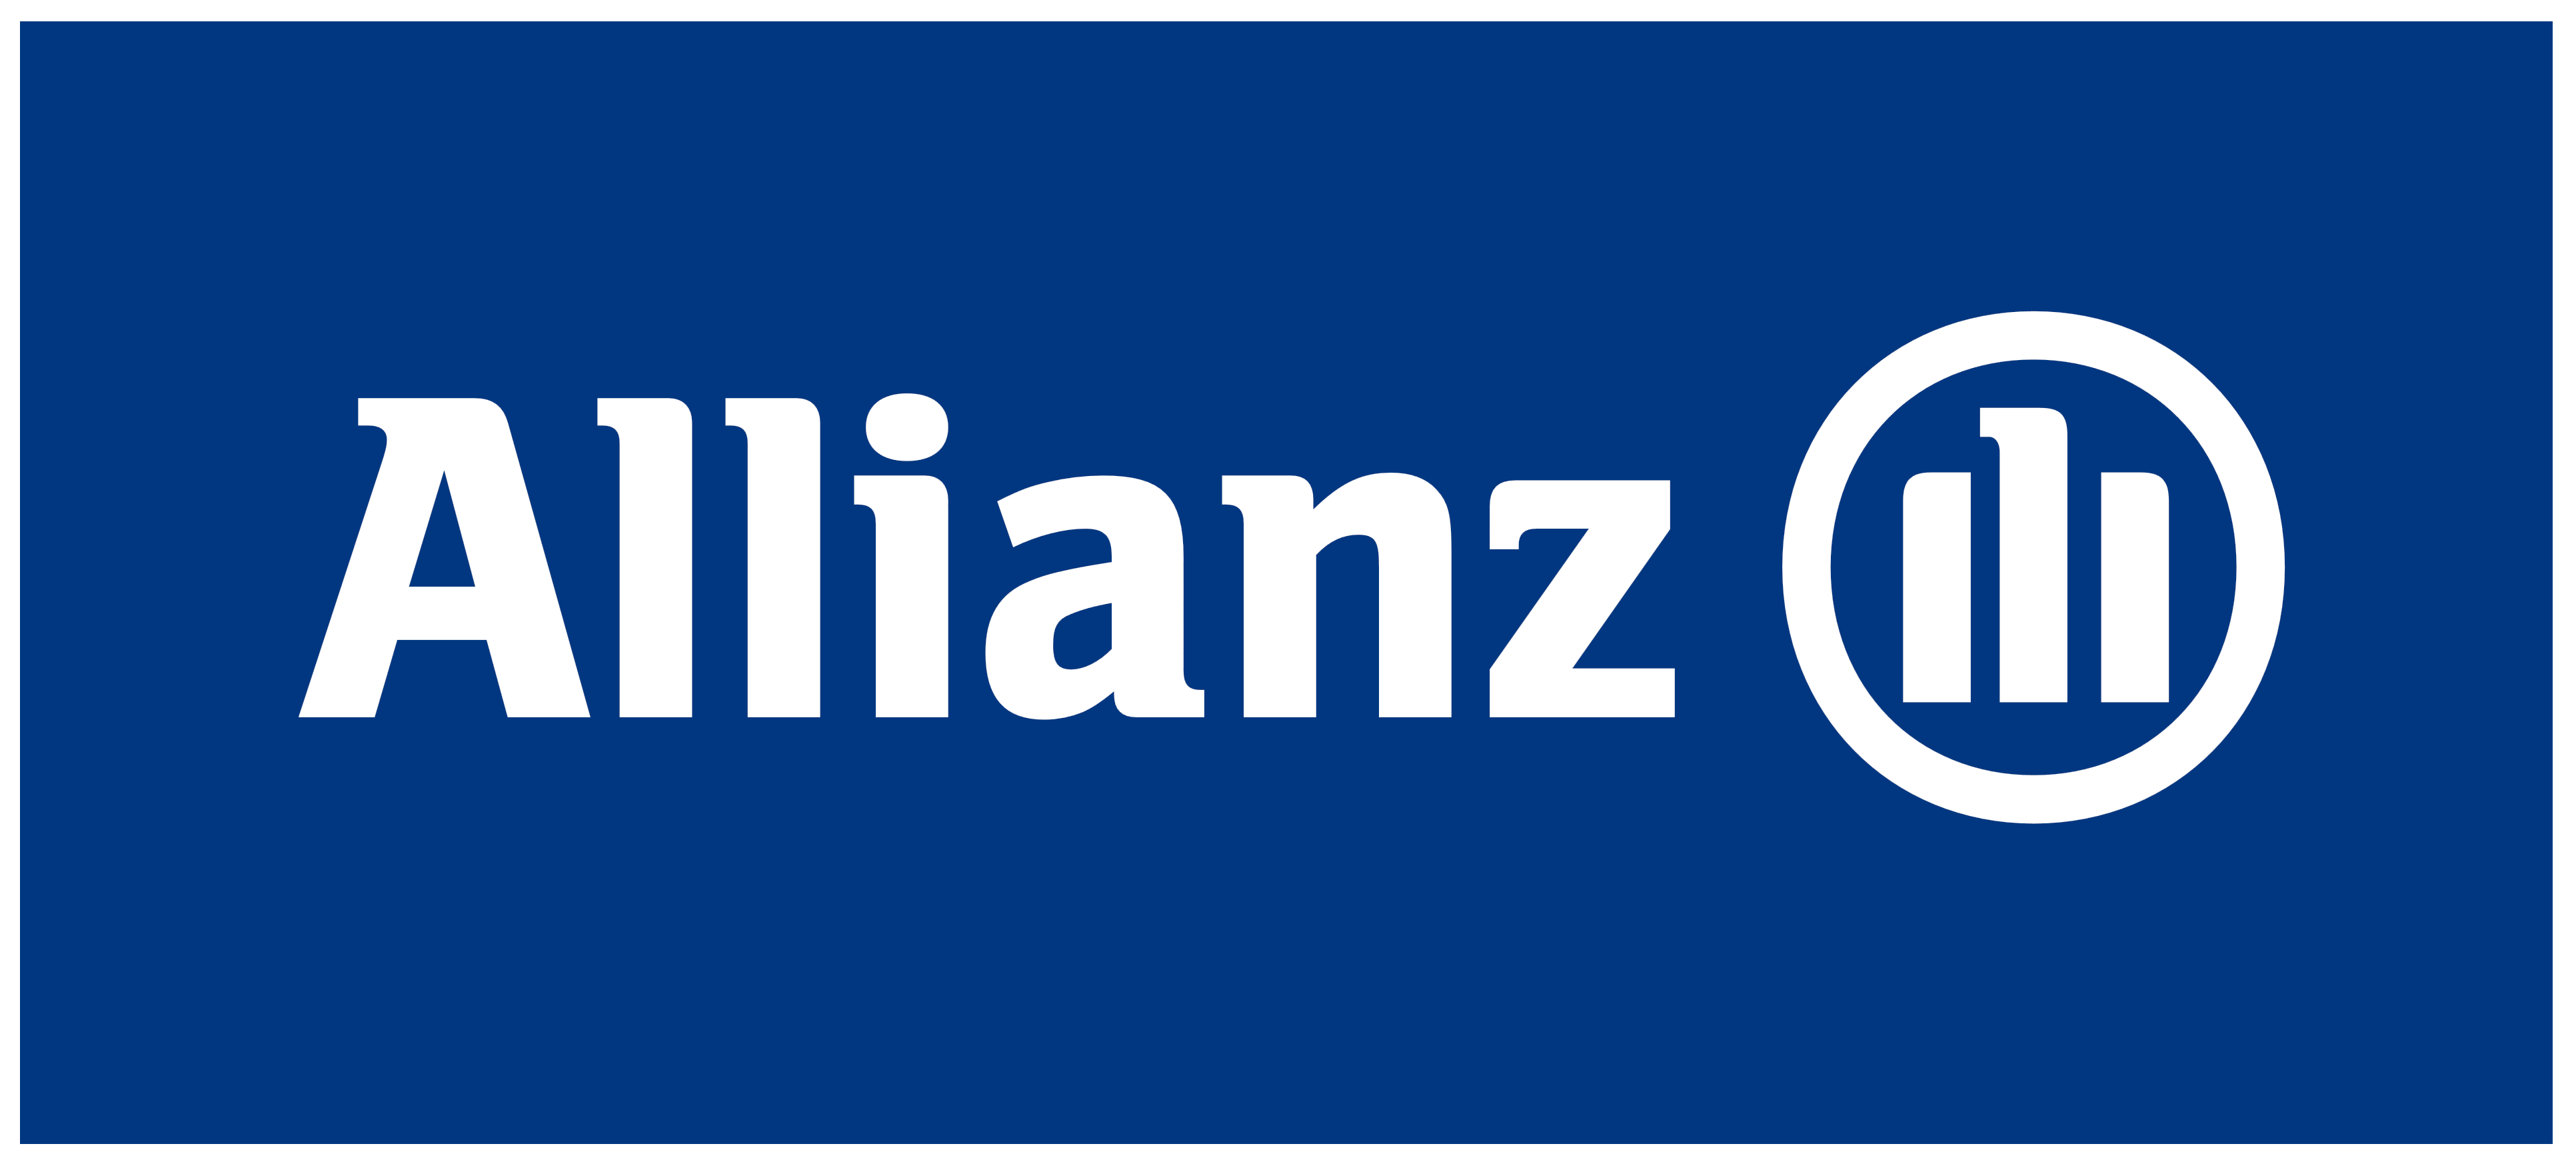 Allianz logo, logotype